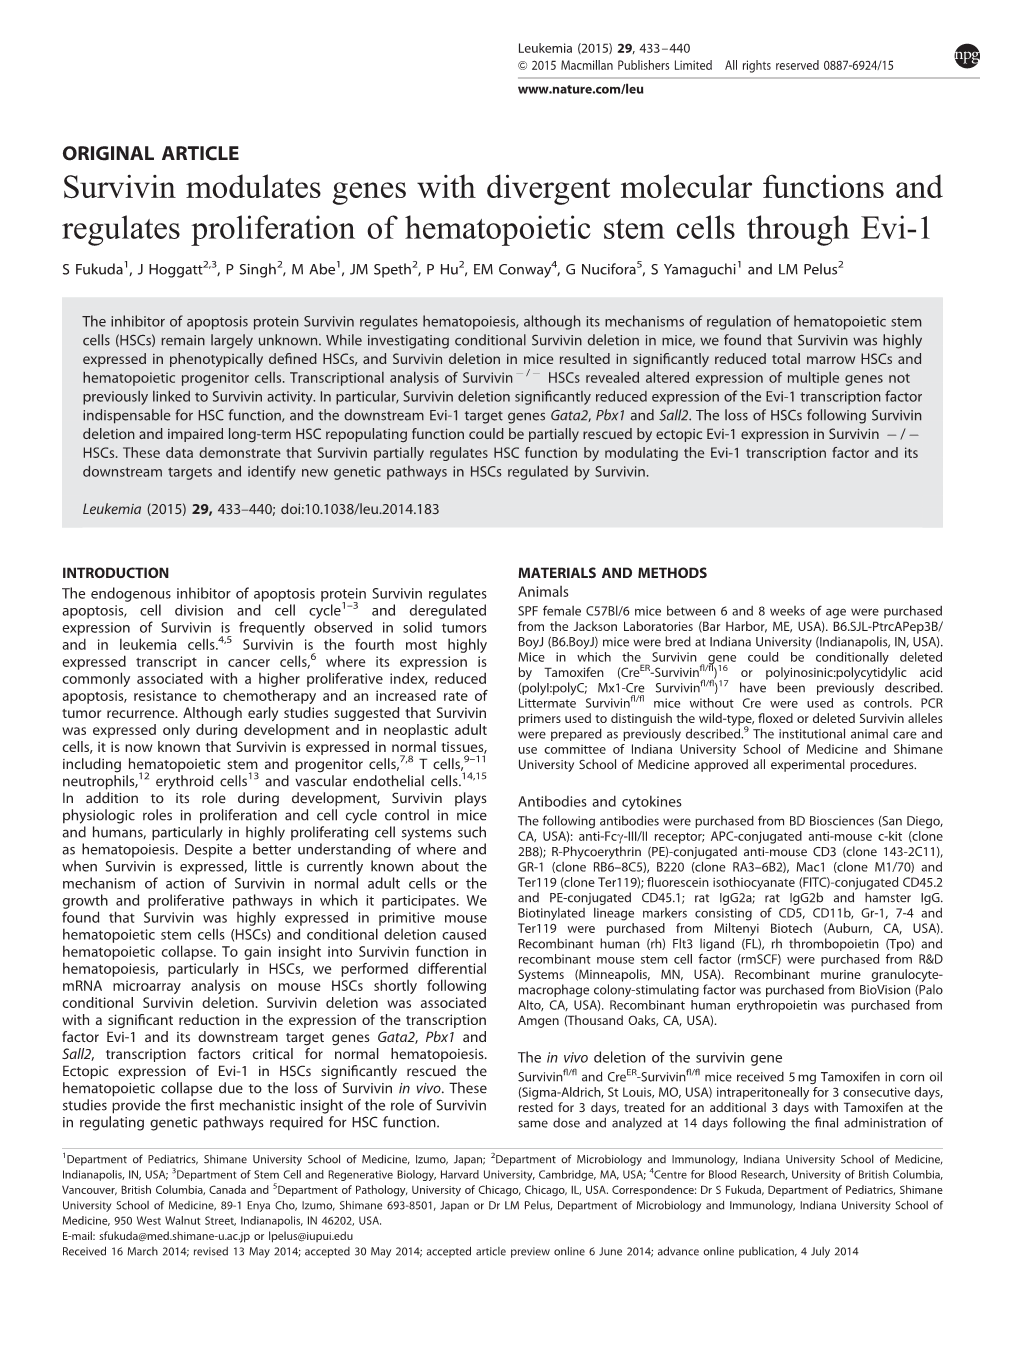 Survivin Modulates Genes with Divergent Molecular Functions and Regulates Proliferation of Hematopoietic Stem Cells Through Evi-1